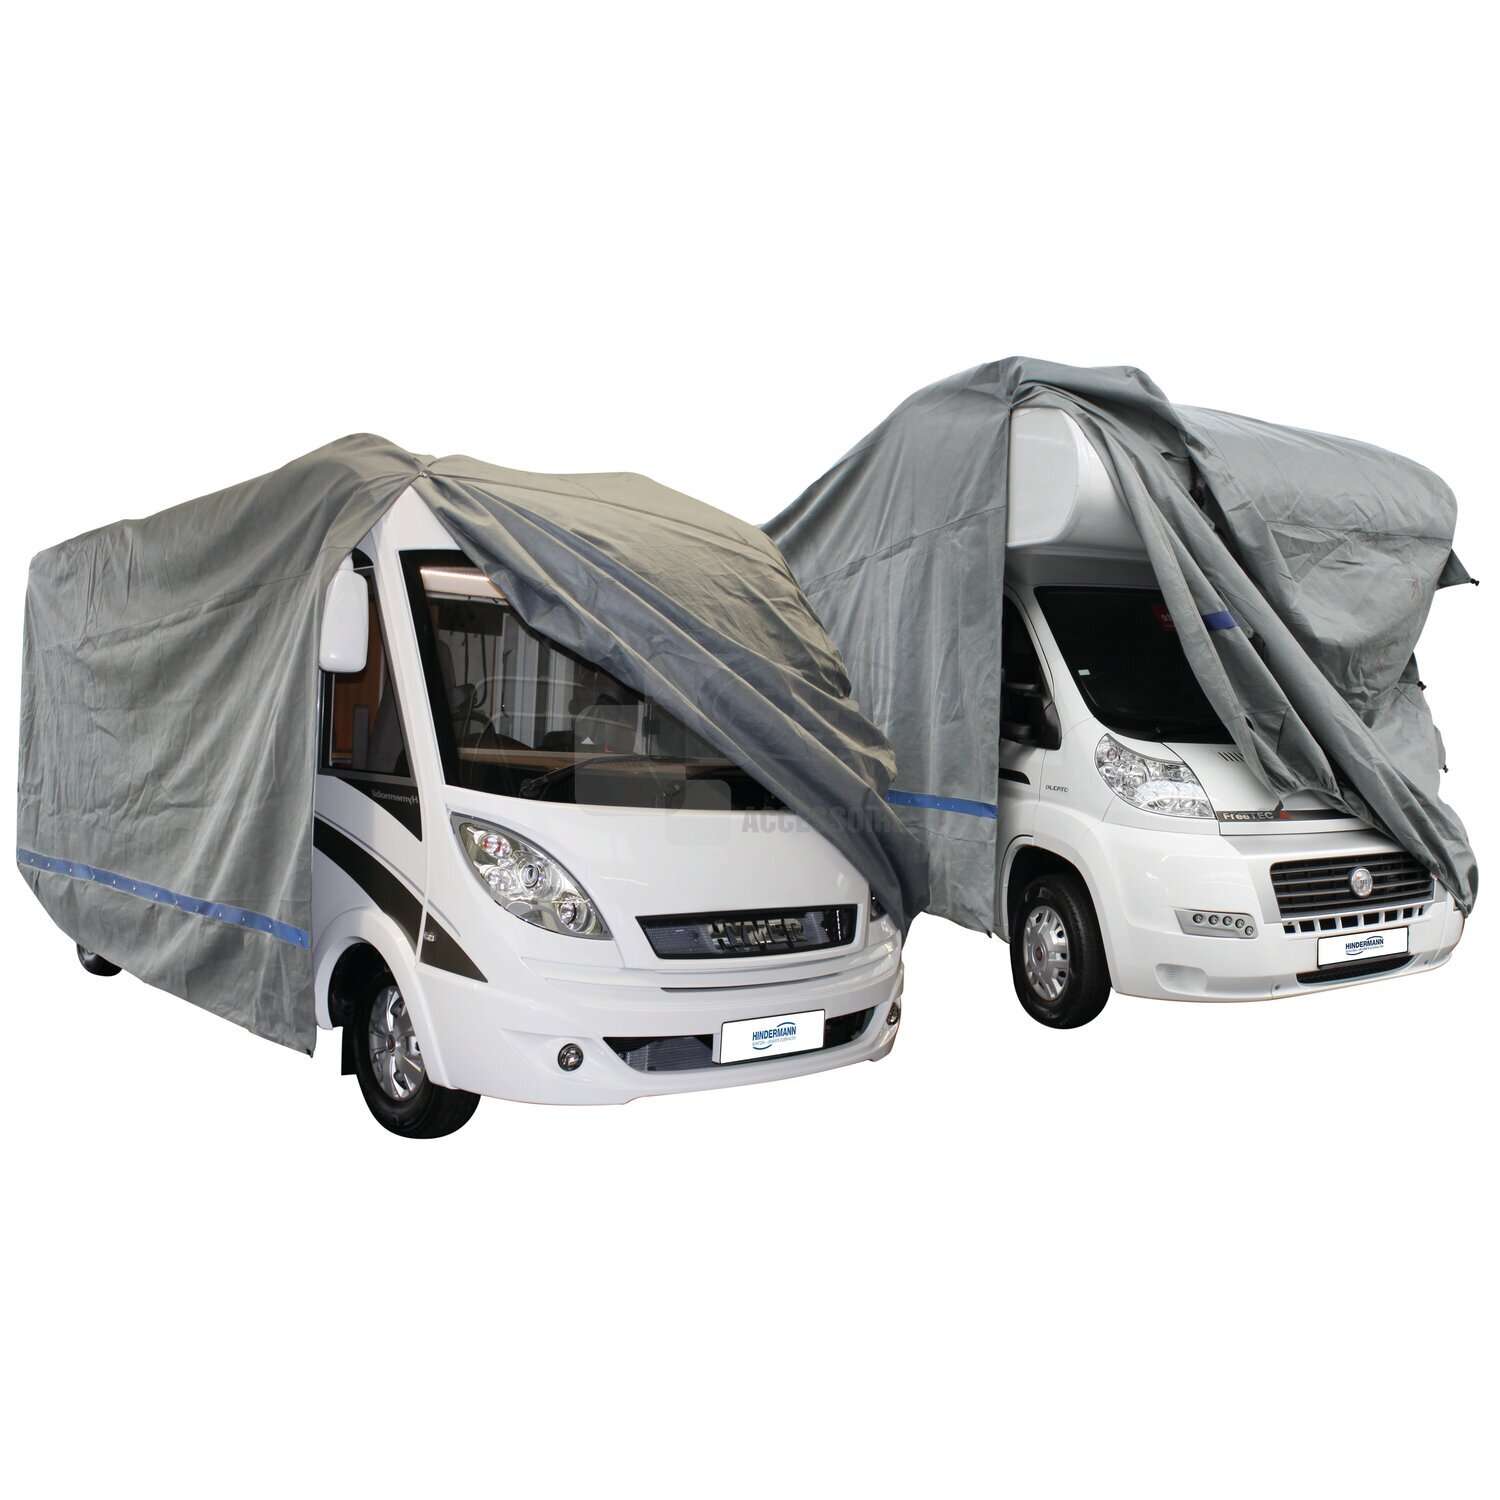 Housse de protection pour camping-car Universal, Bâche de protection toit  camping-car, Auvent, Accessoires Camping-car